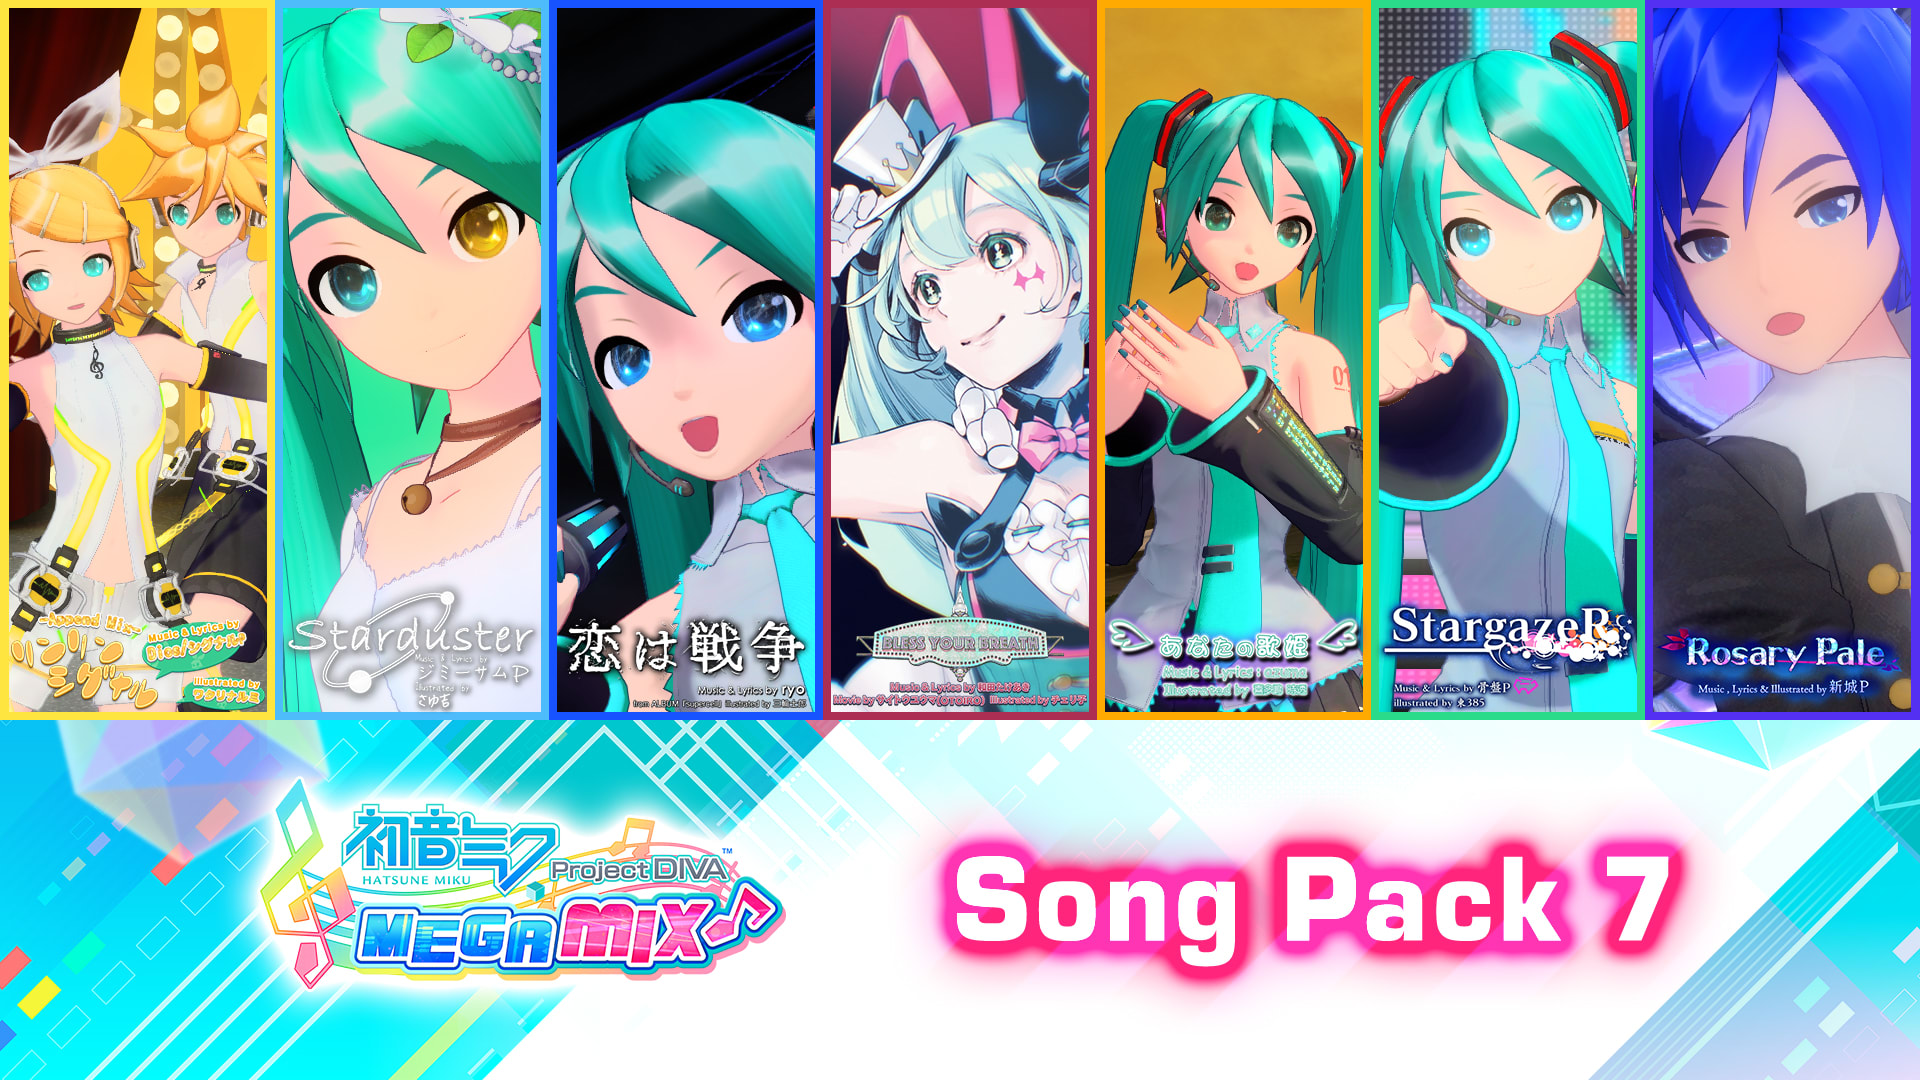 Hatsune Miku: Project DIVA Mega Mix Song Pack 7